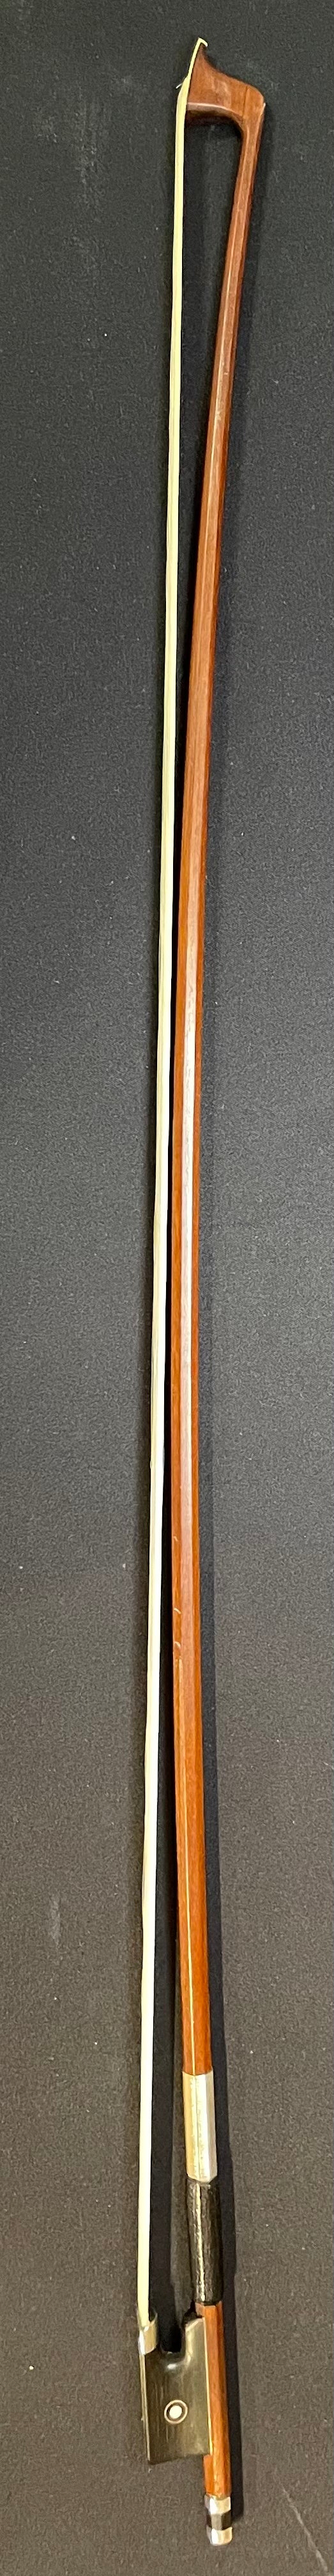 4/4 Violin Bow - LSB Wood Model